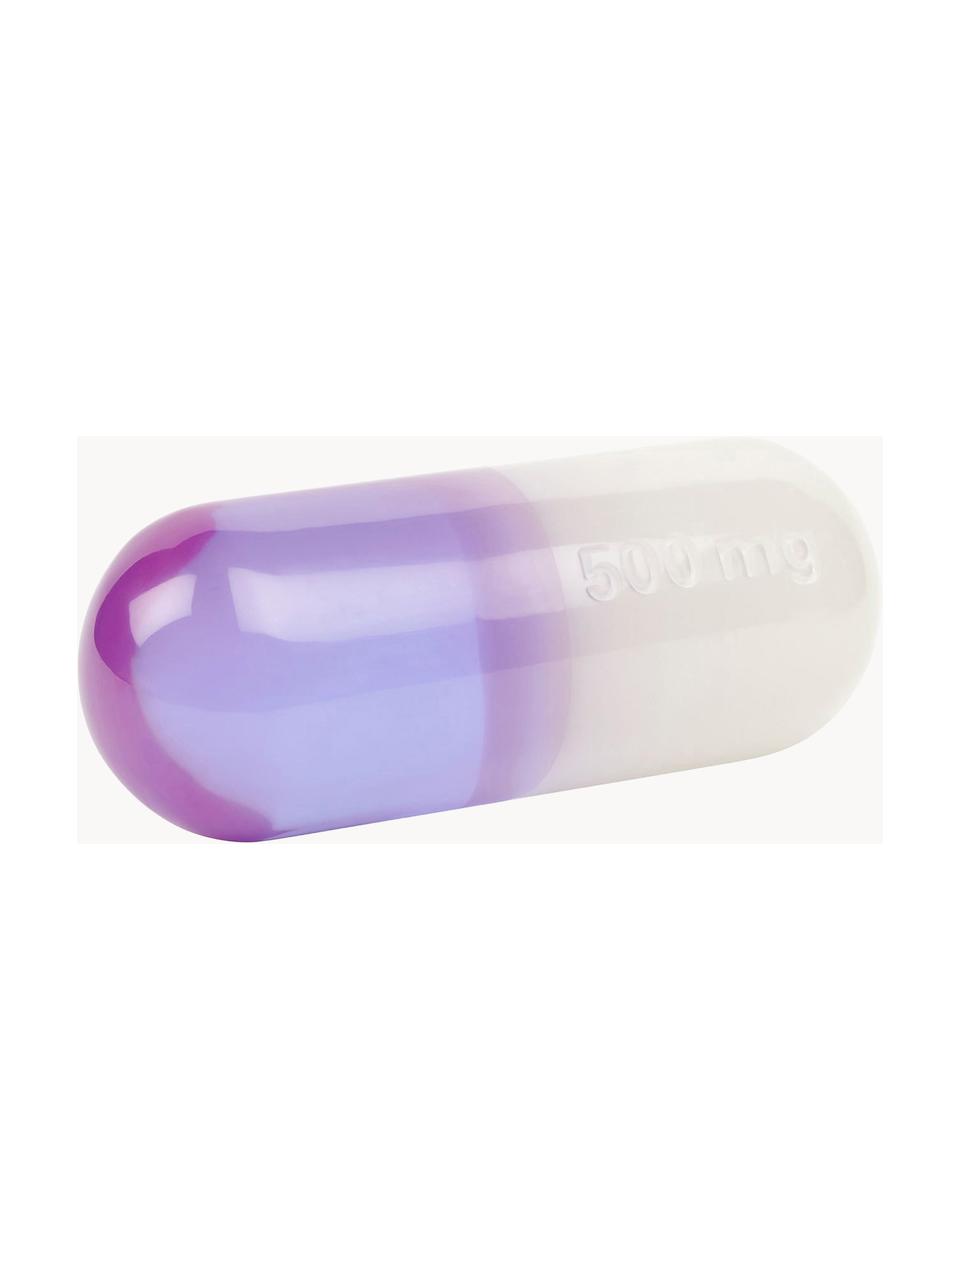 Deko-Objekt Pill, Polyacryl, poliert, Weiss, Lavendel, B 29 x H 13 cm